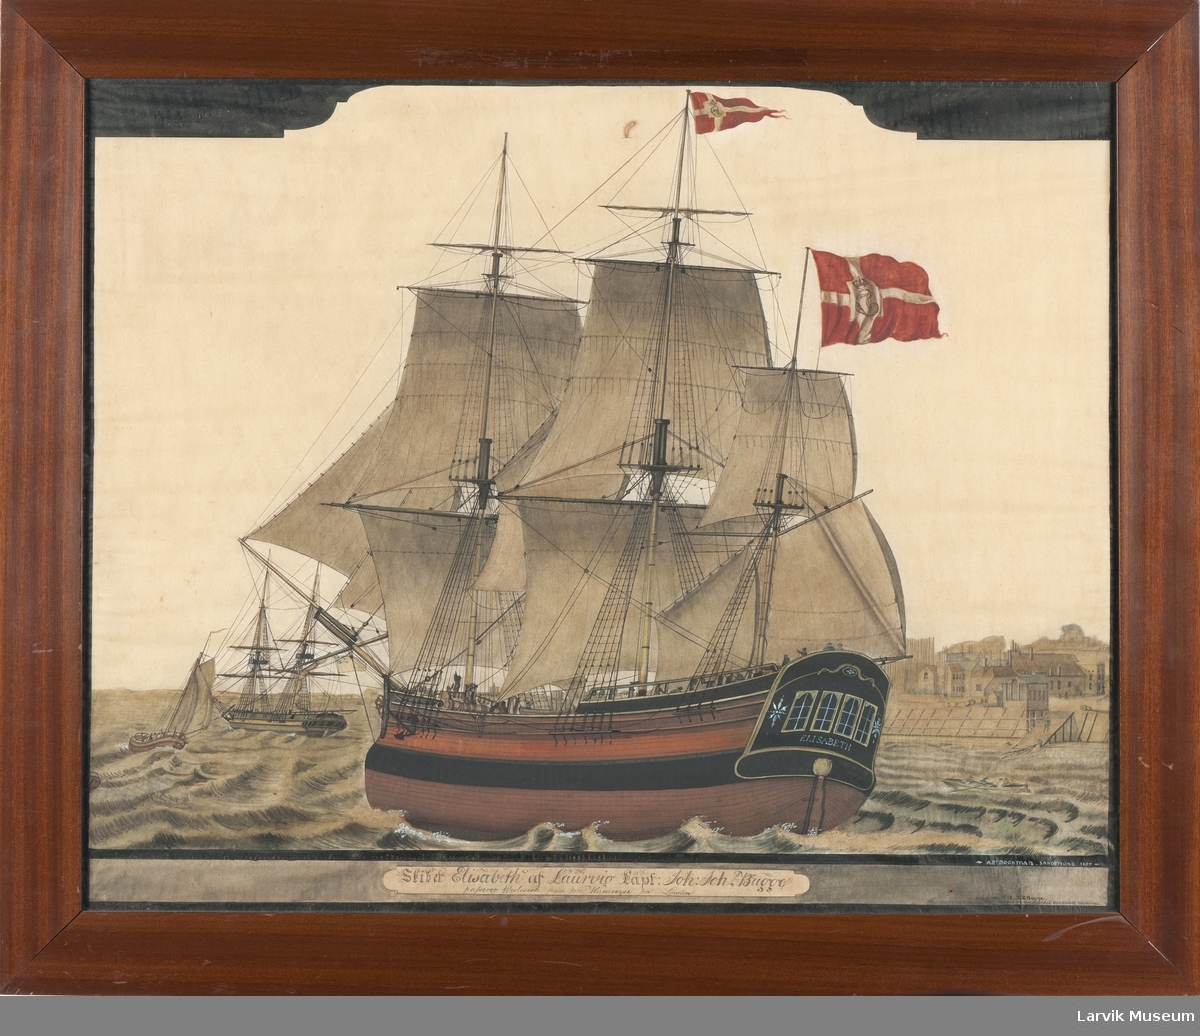 ELISABETH
Nasjon: Norsk
Type: Fullrigger
Byggeår: 1746
Byggested: Arendal, Norge